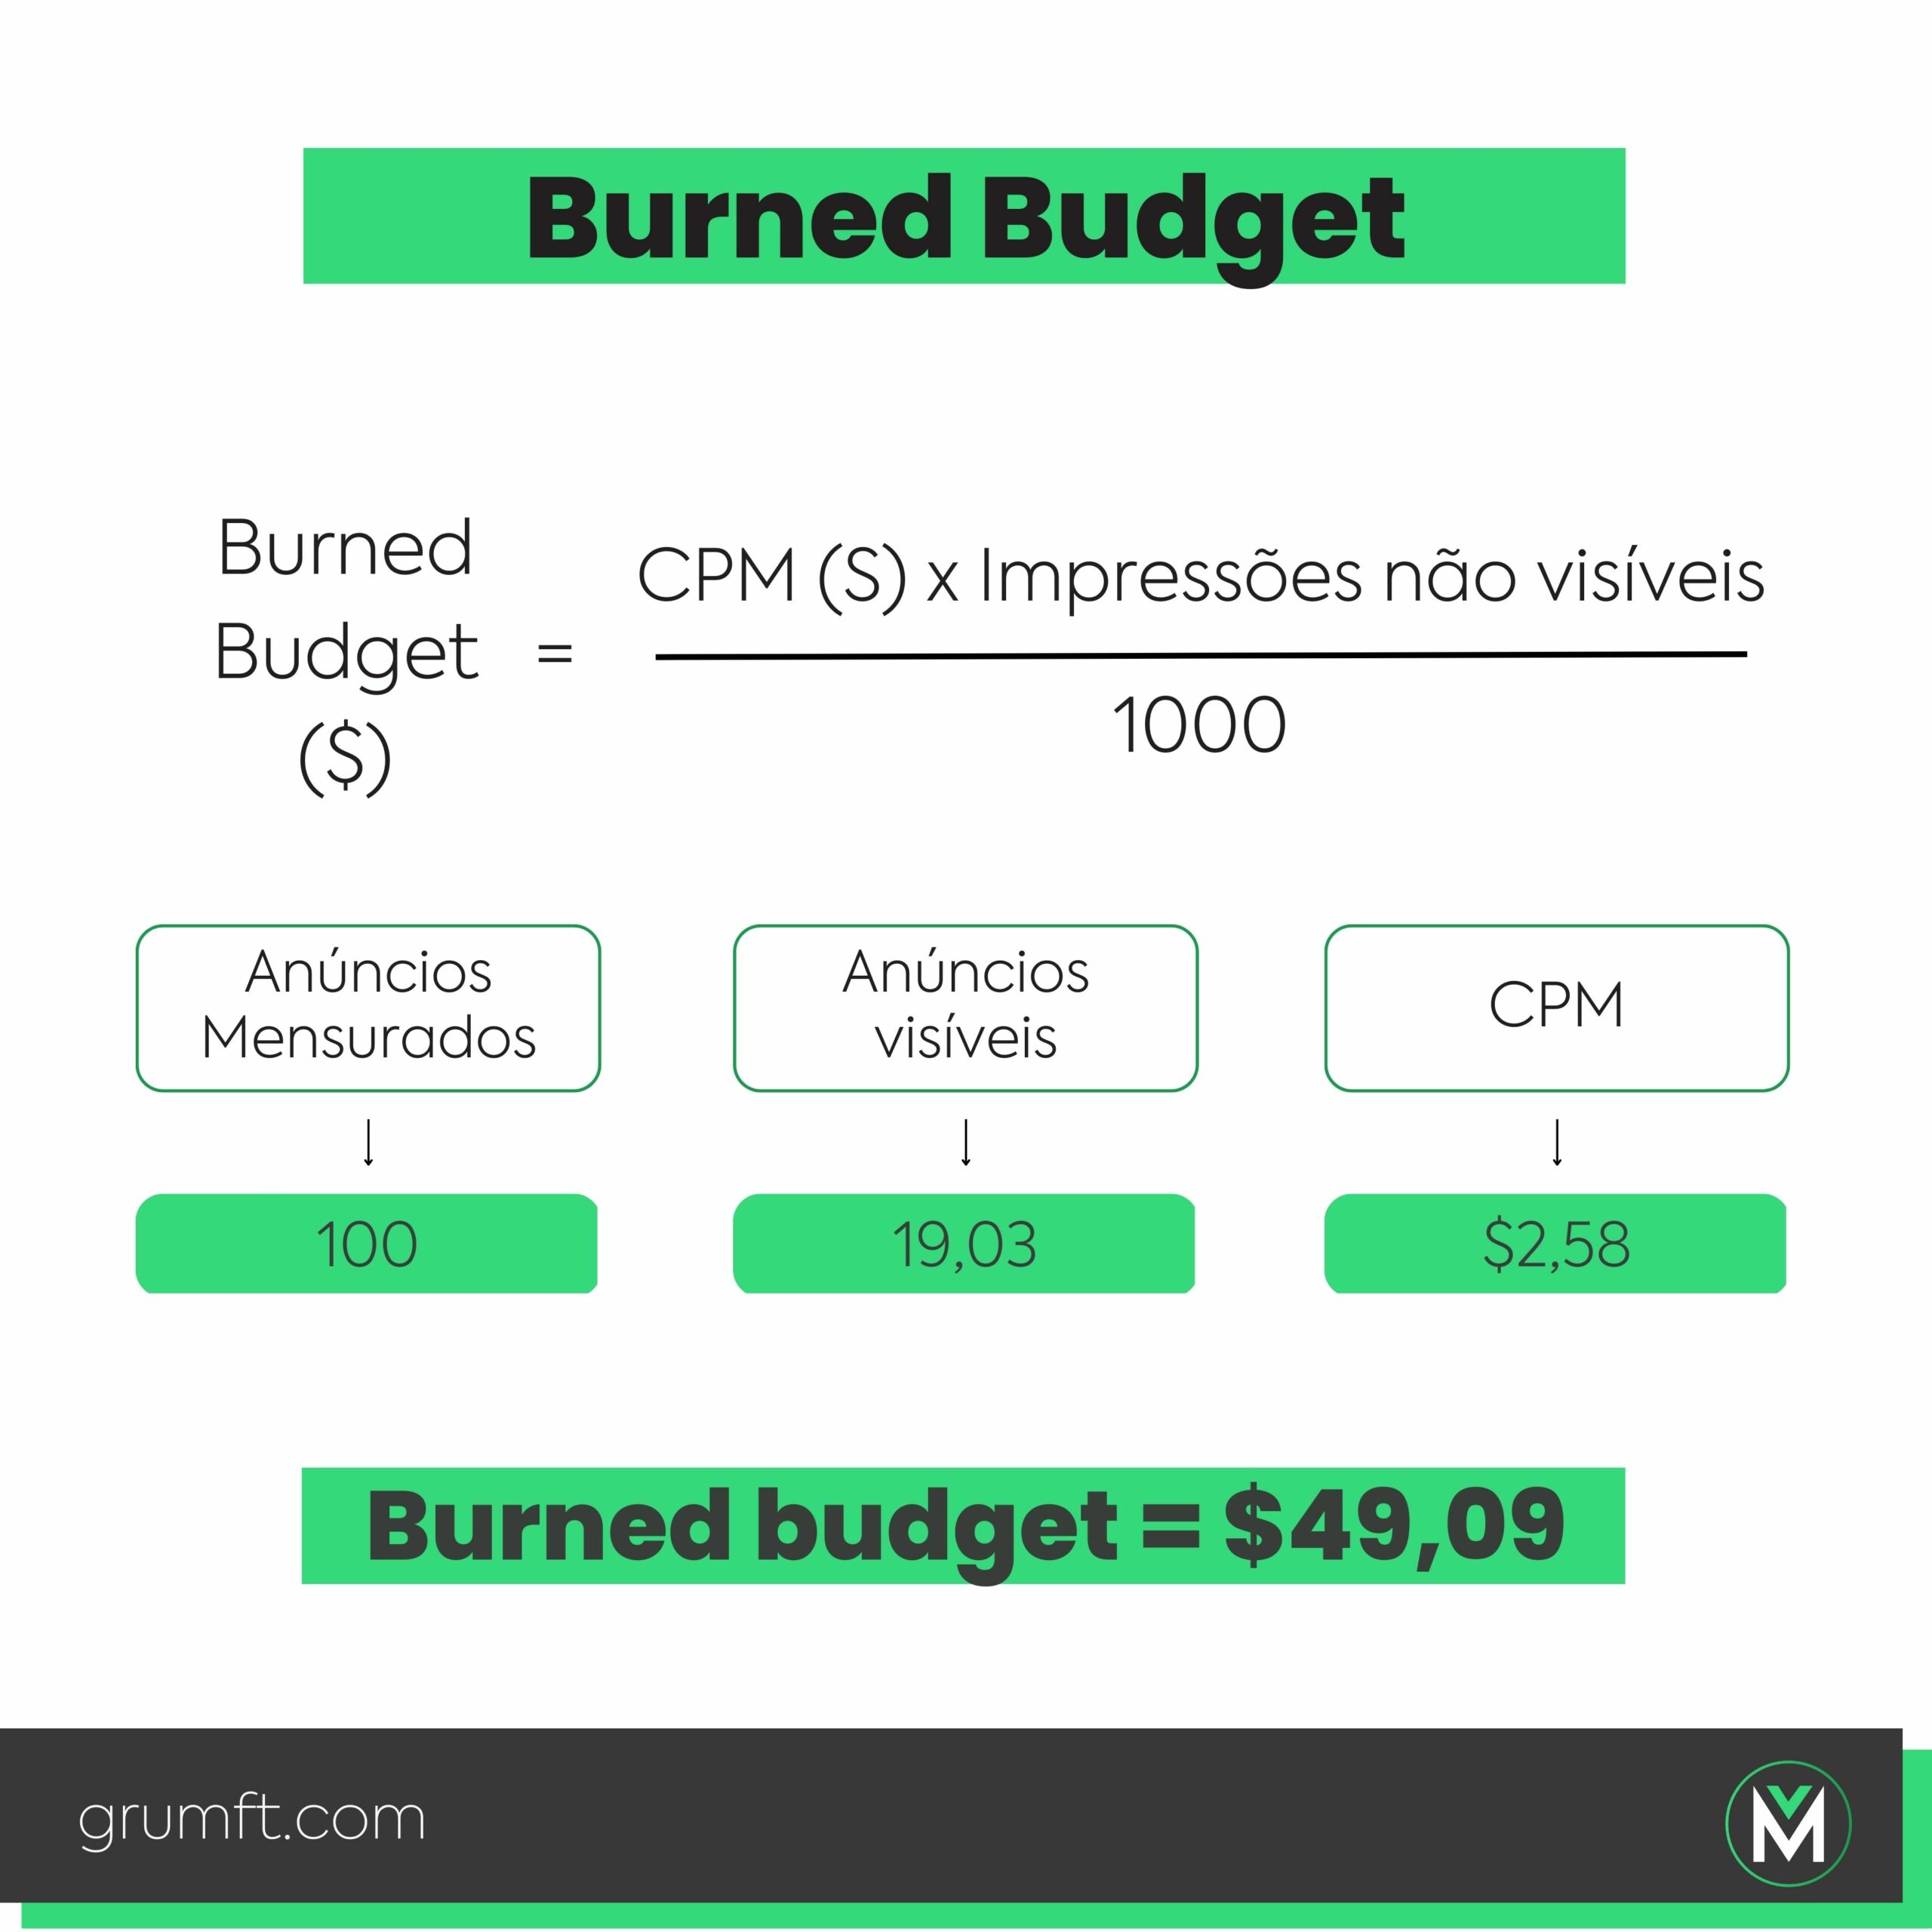 Burned budget